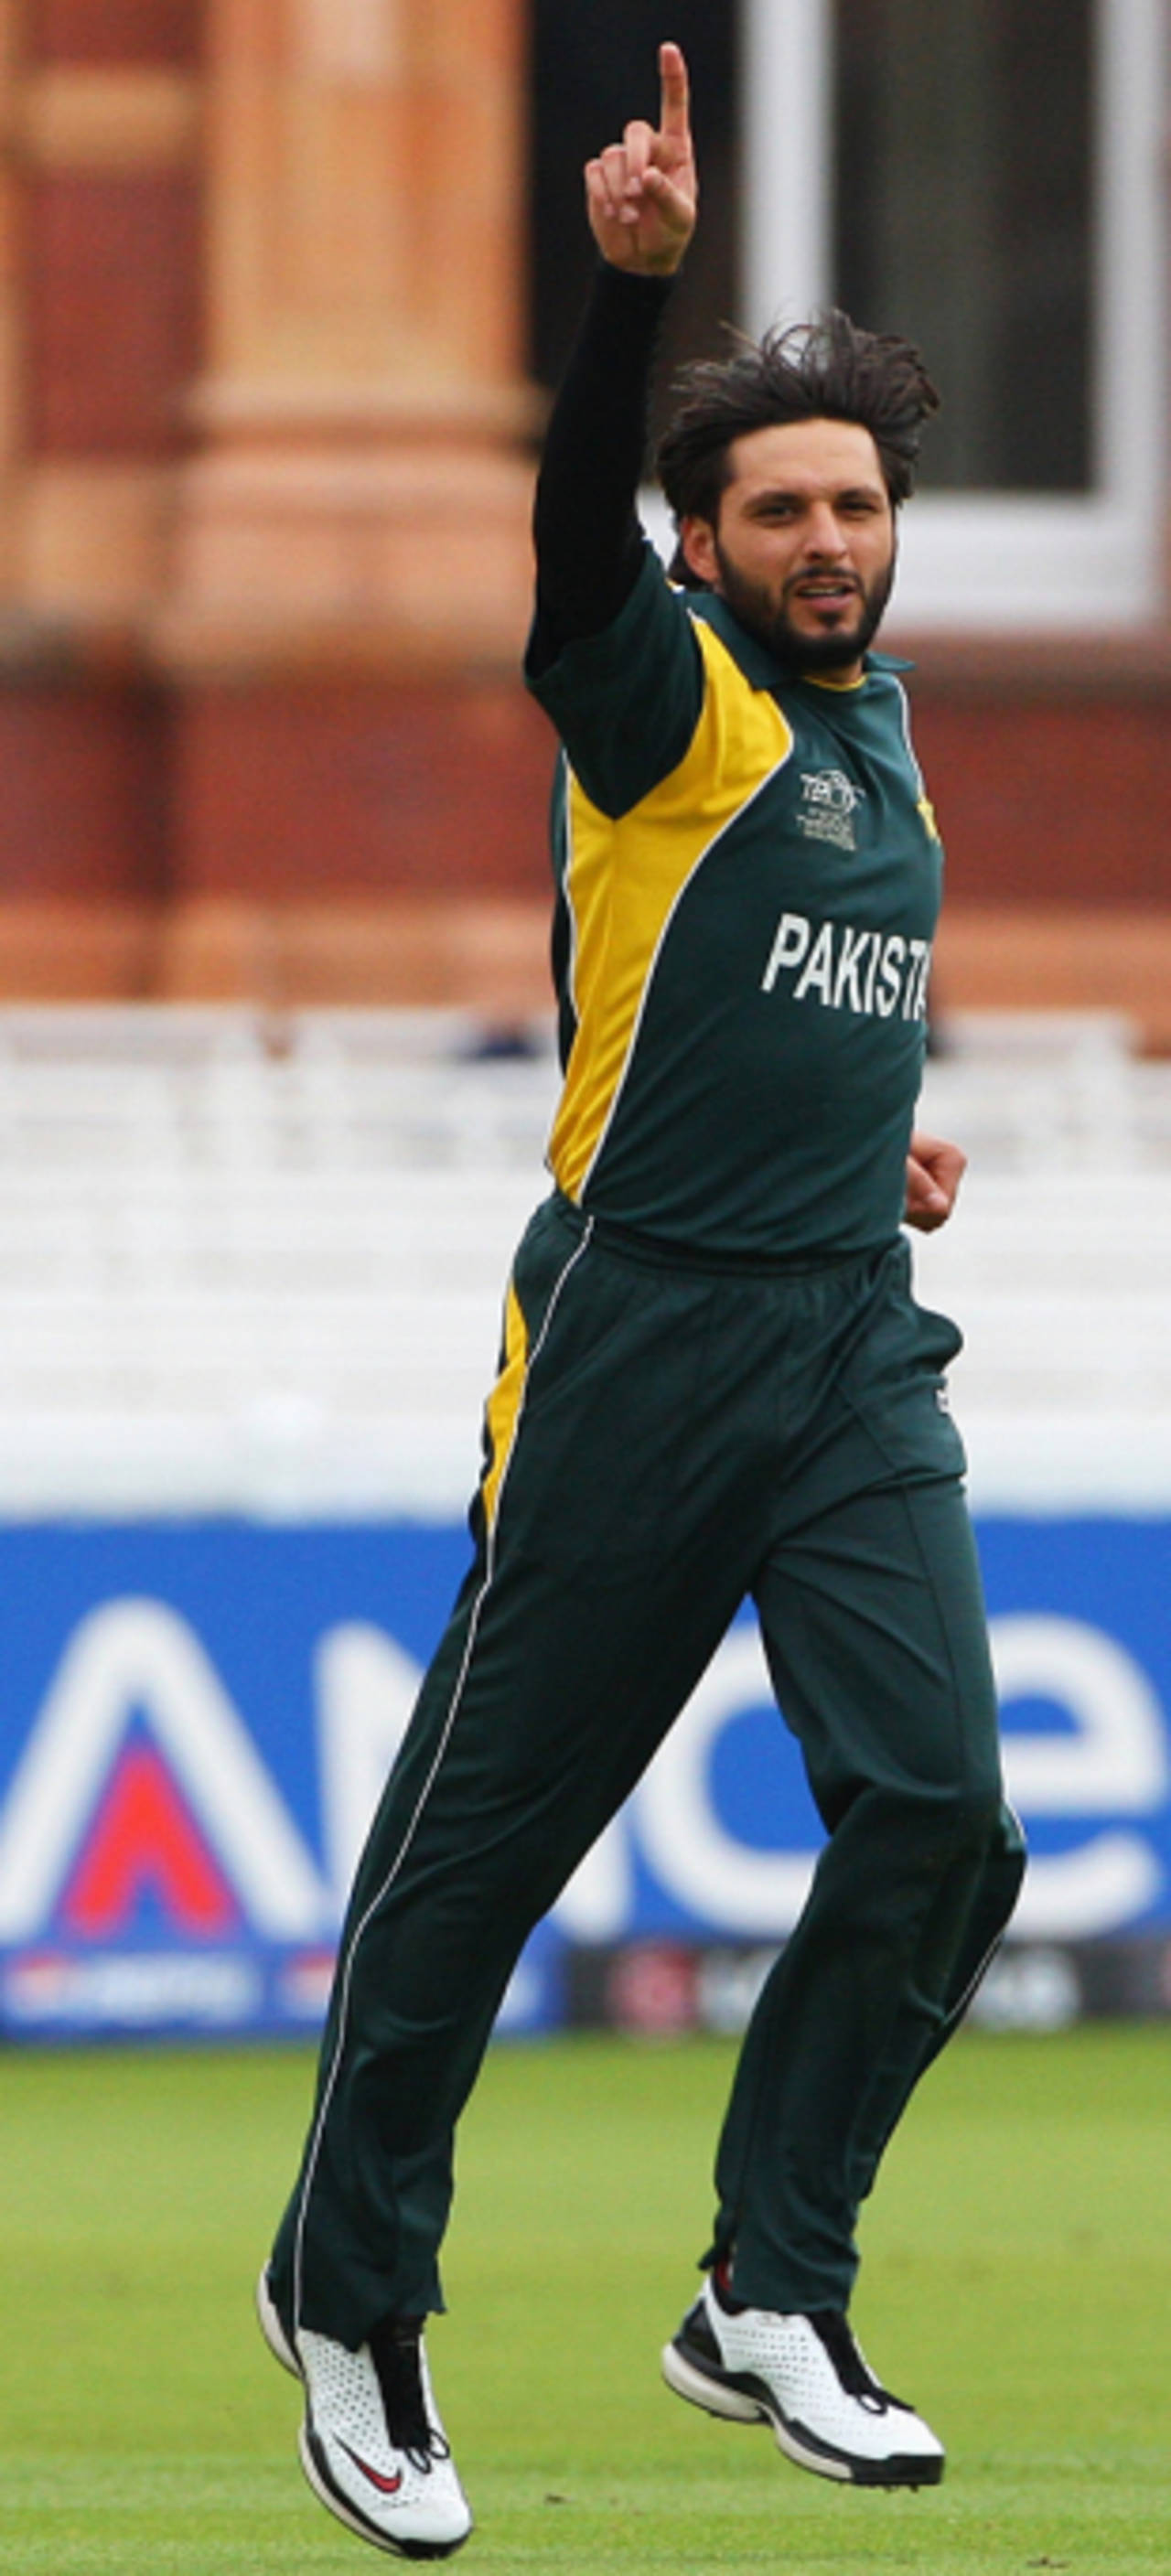 Shahid Afridi celebrates another wicket, Netherlands v Pakistan, ICC World Twenty20, Lord's, June 9, 2009